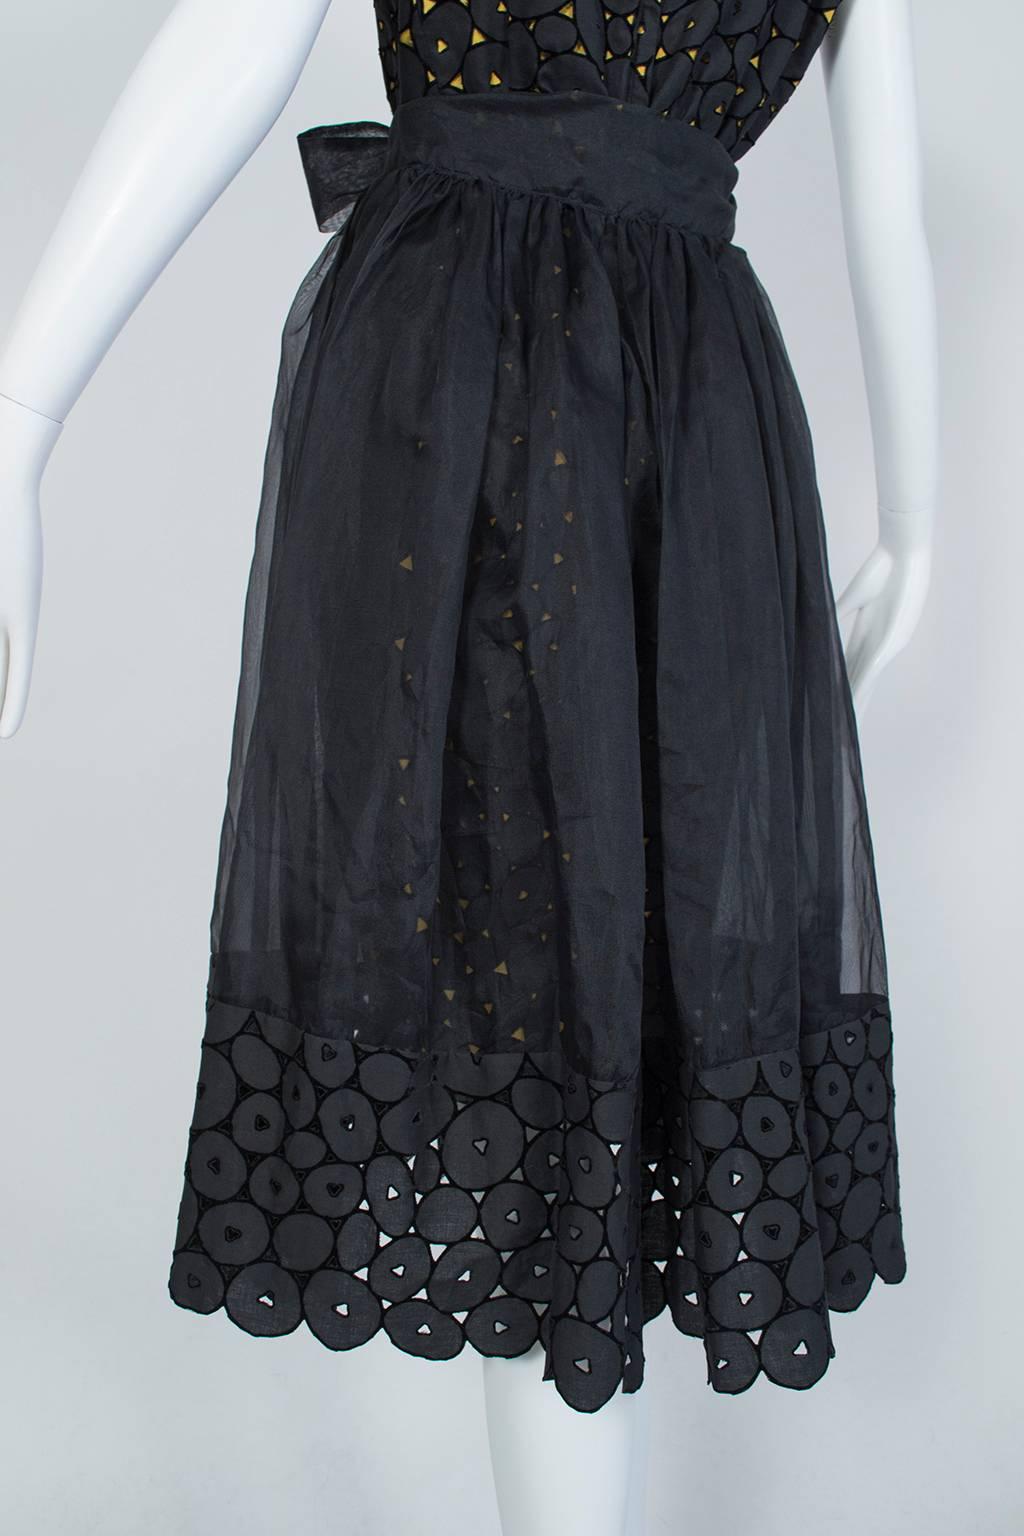 Black and Gold Eyelet Shorts Romper with Sheer Hostess Overskirt - Medium, 1950s 8